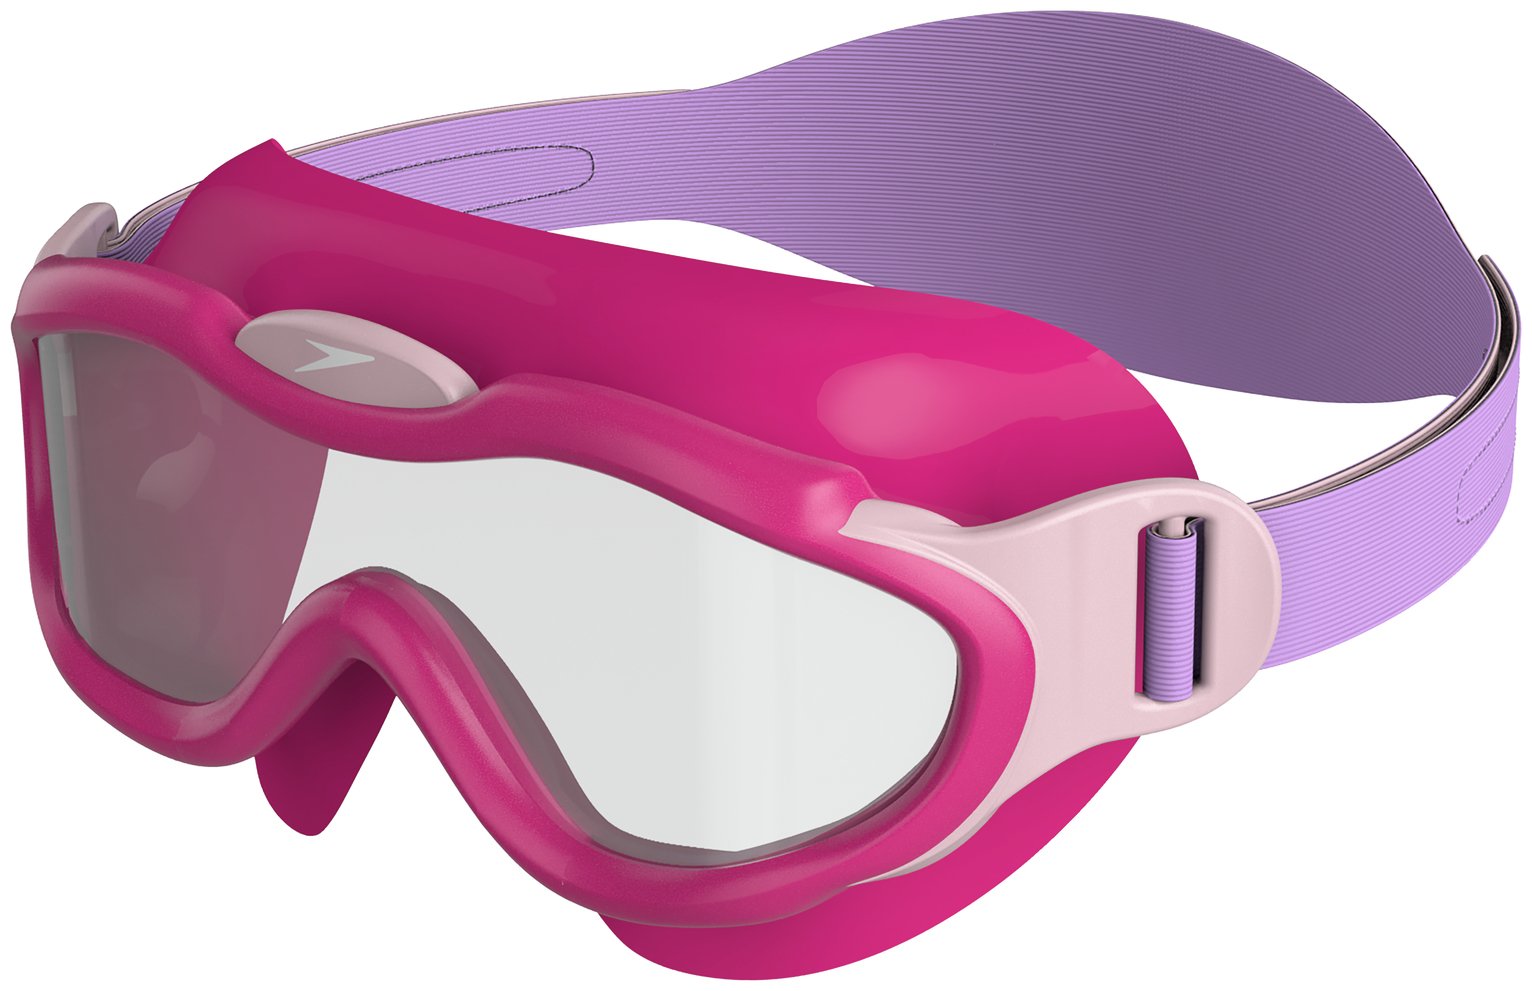 Speedo Infant Biofuse Mask Swim Goggle - Pink/ Purple